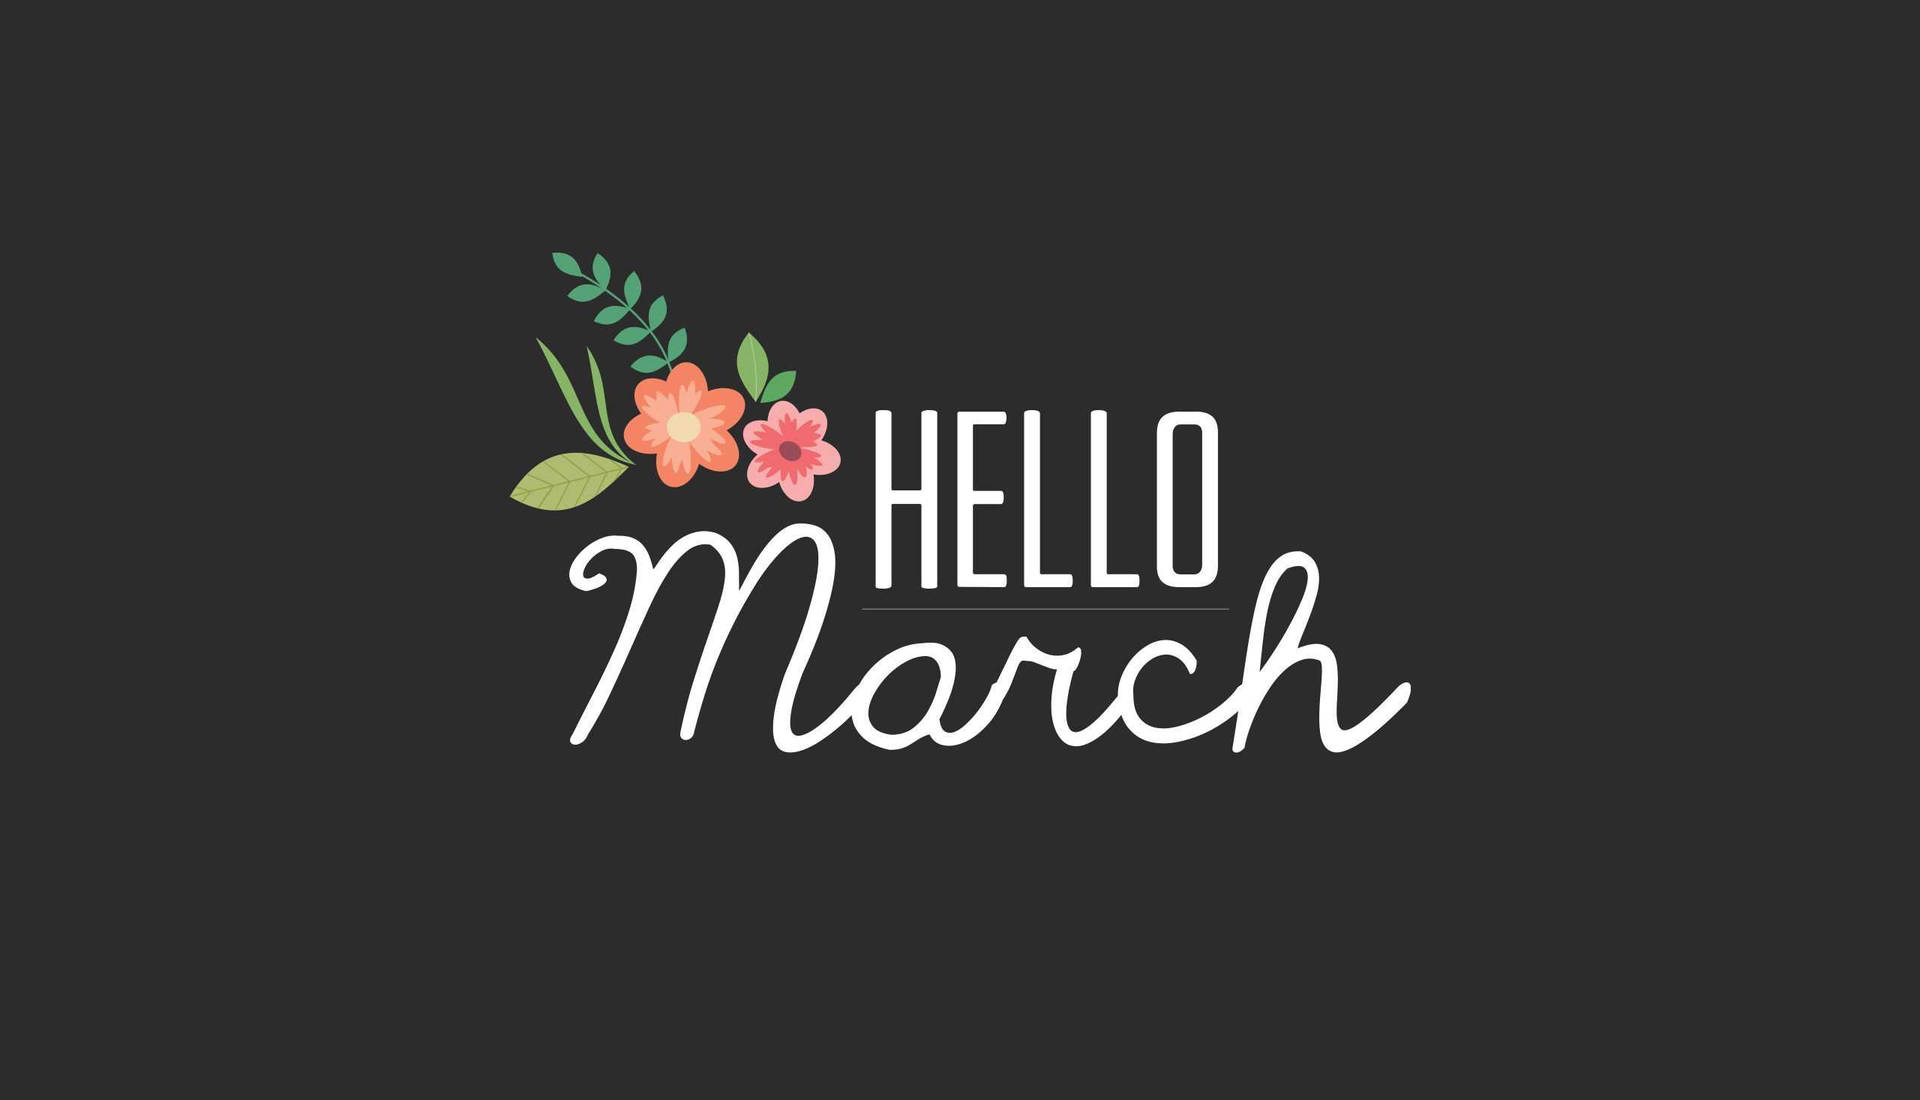 Hello March Image